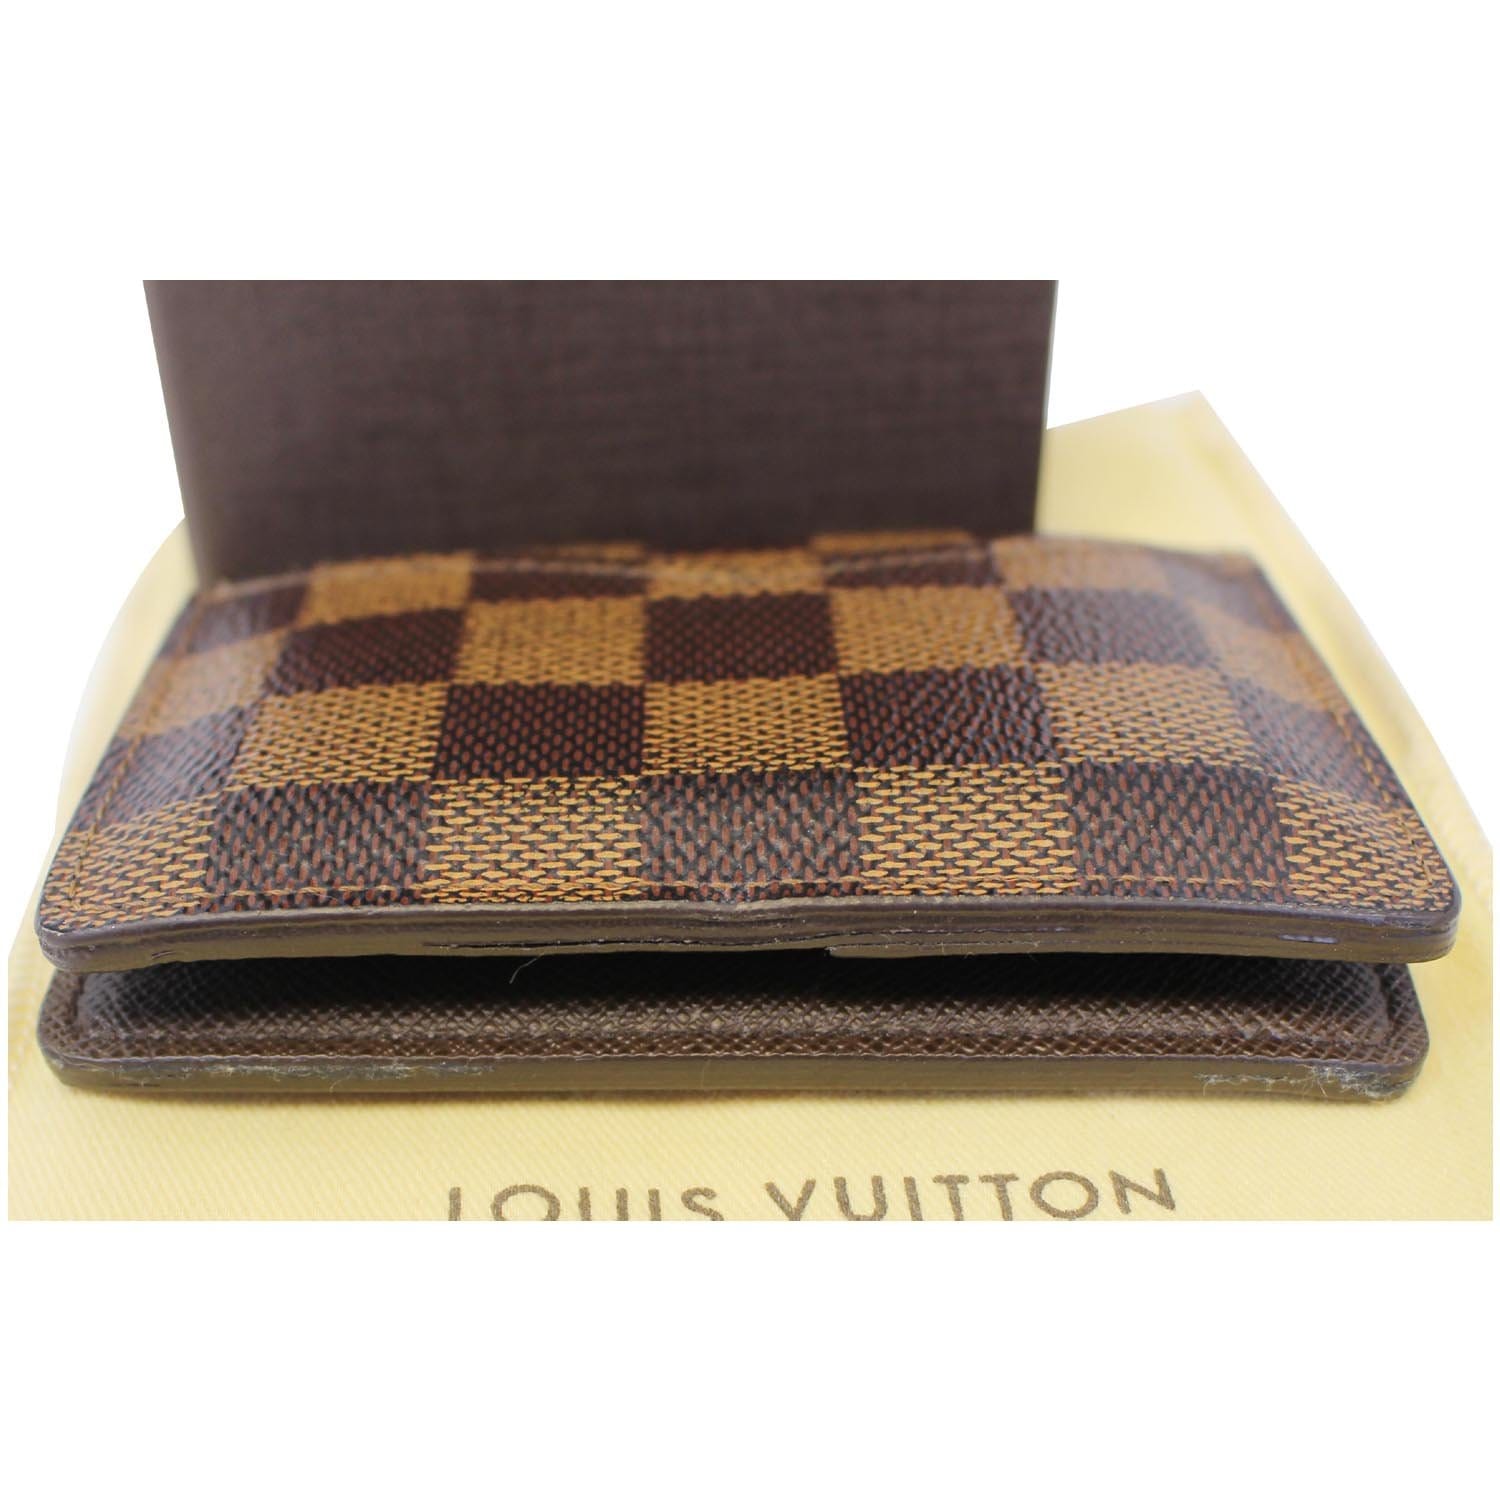 Men's Louis Vuitton LV Wallet - Pocket Organizer Card for Sale in